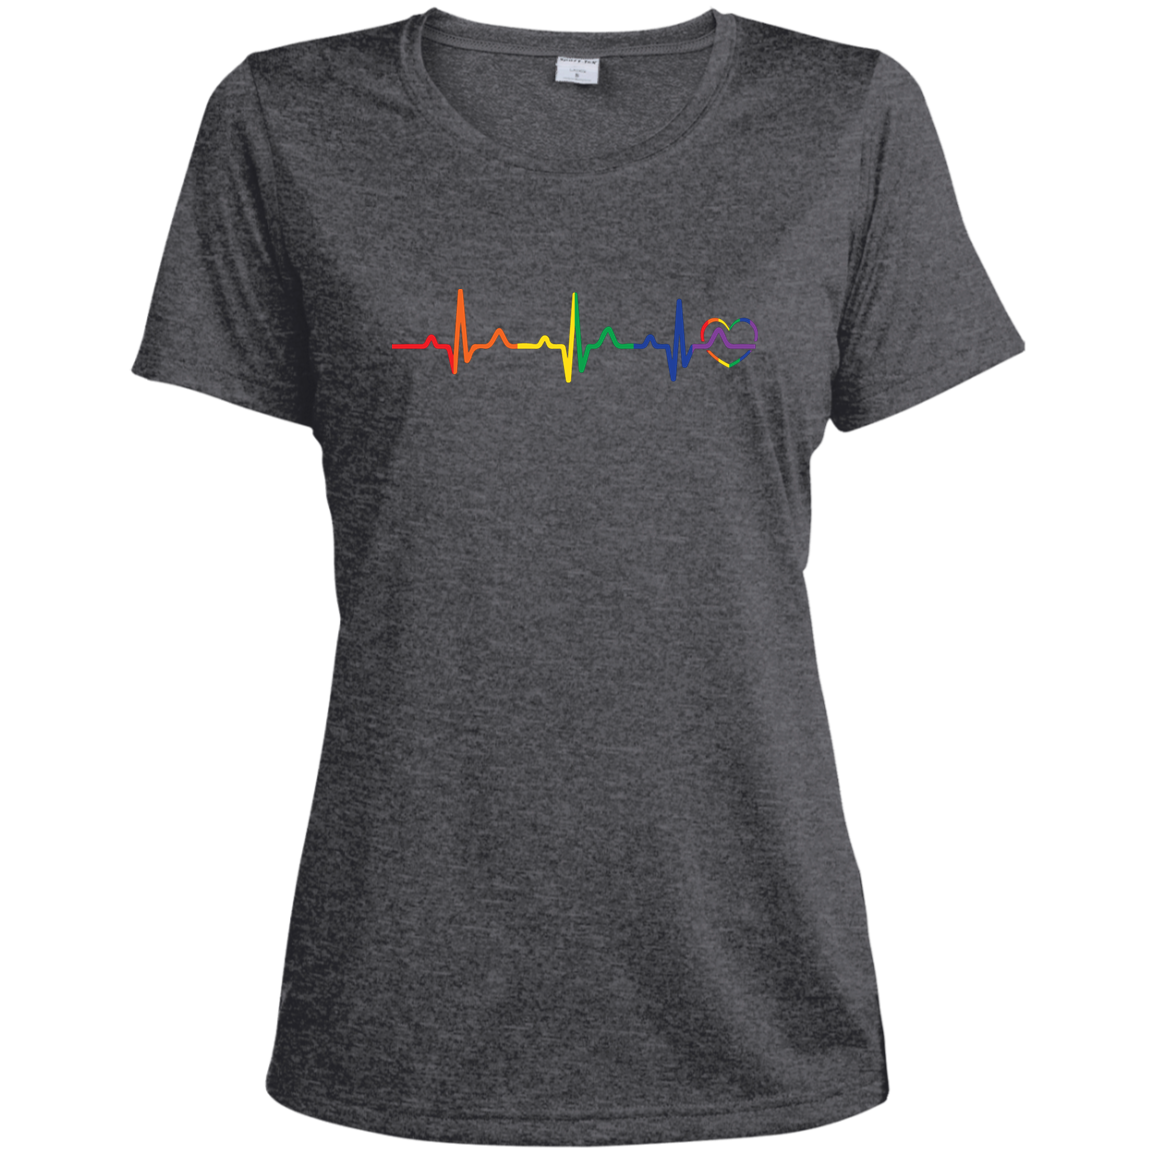 Rainbow Heartbeat gray color LGBT Pride tshirt for women